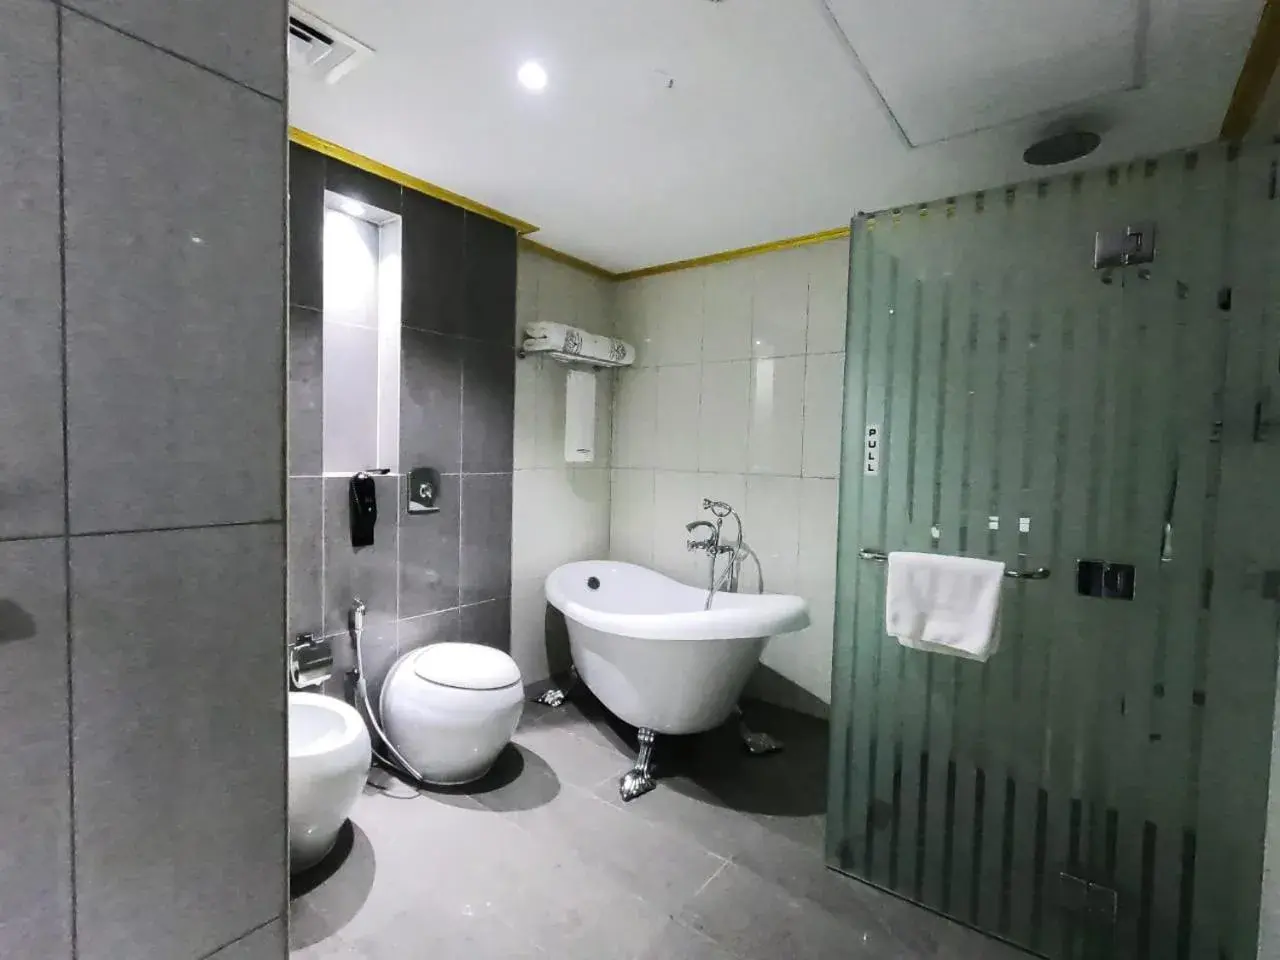 Bathroom in Mangrove Hotel - Ras al Khaimah